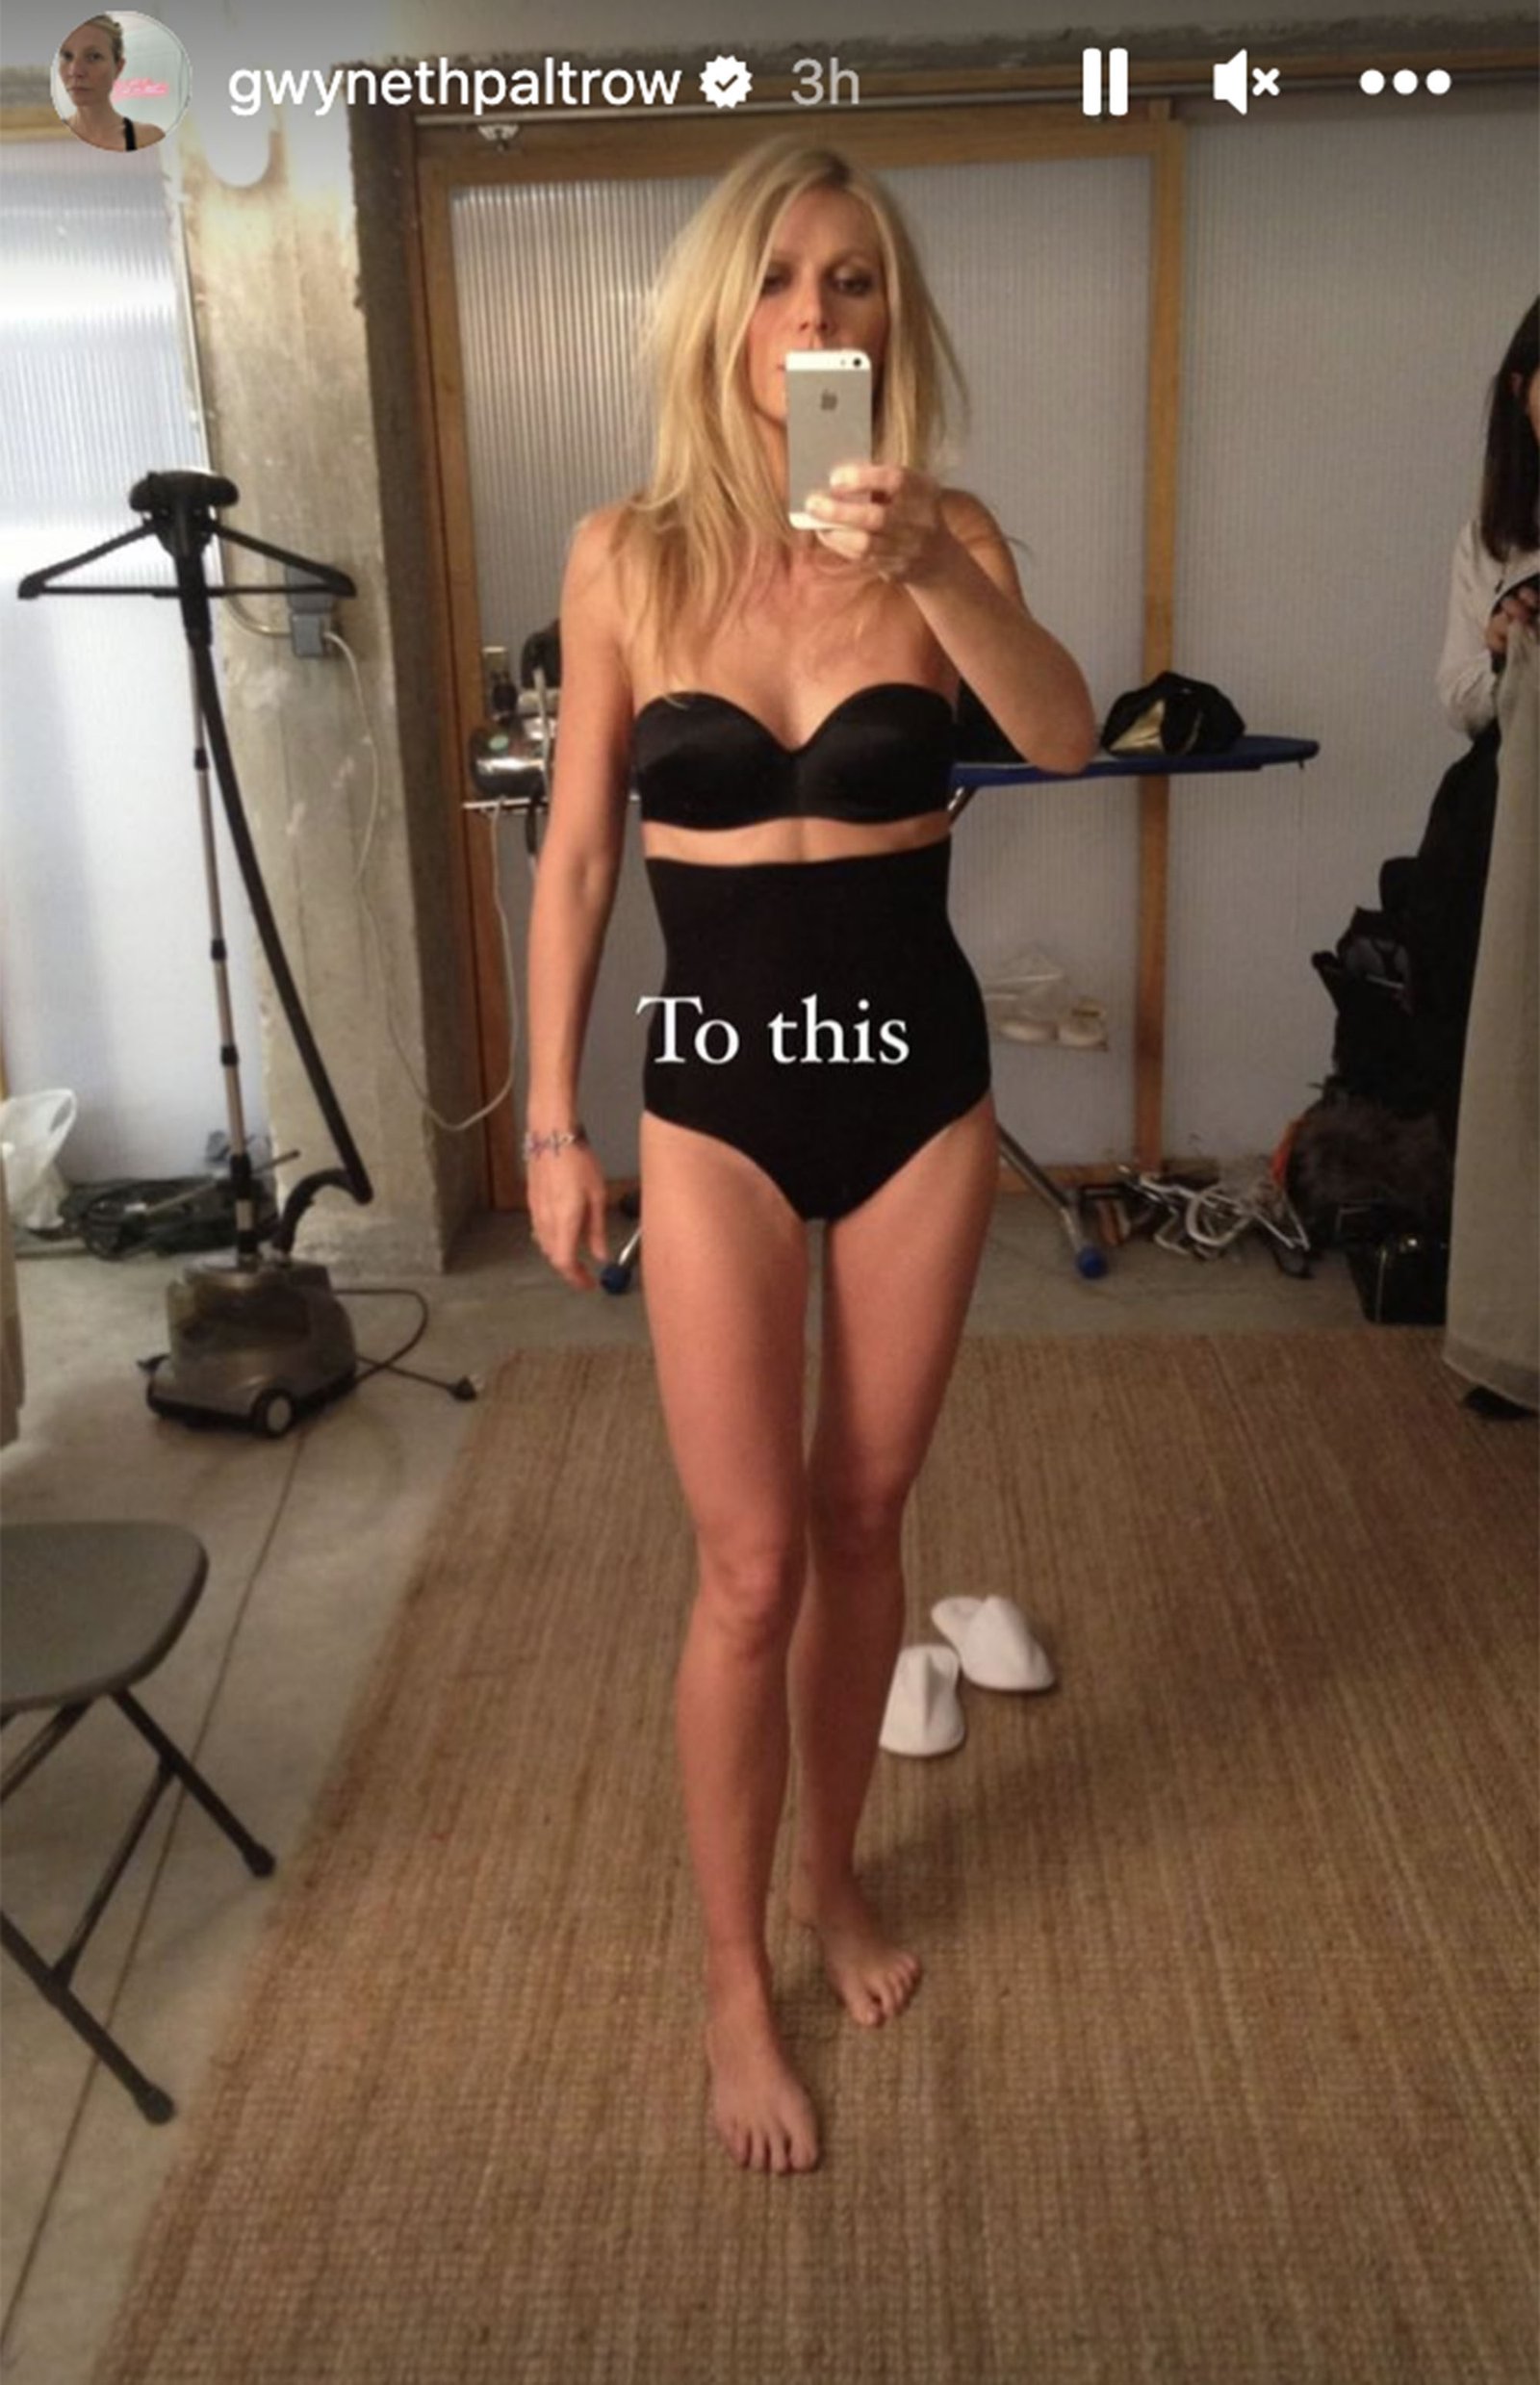 A mirror selfie of Gwyneth Paltrow in a black bra and undies.